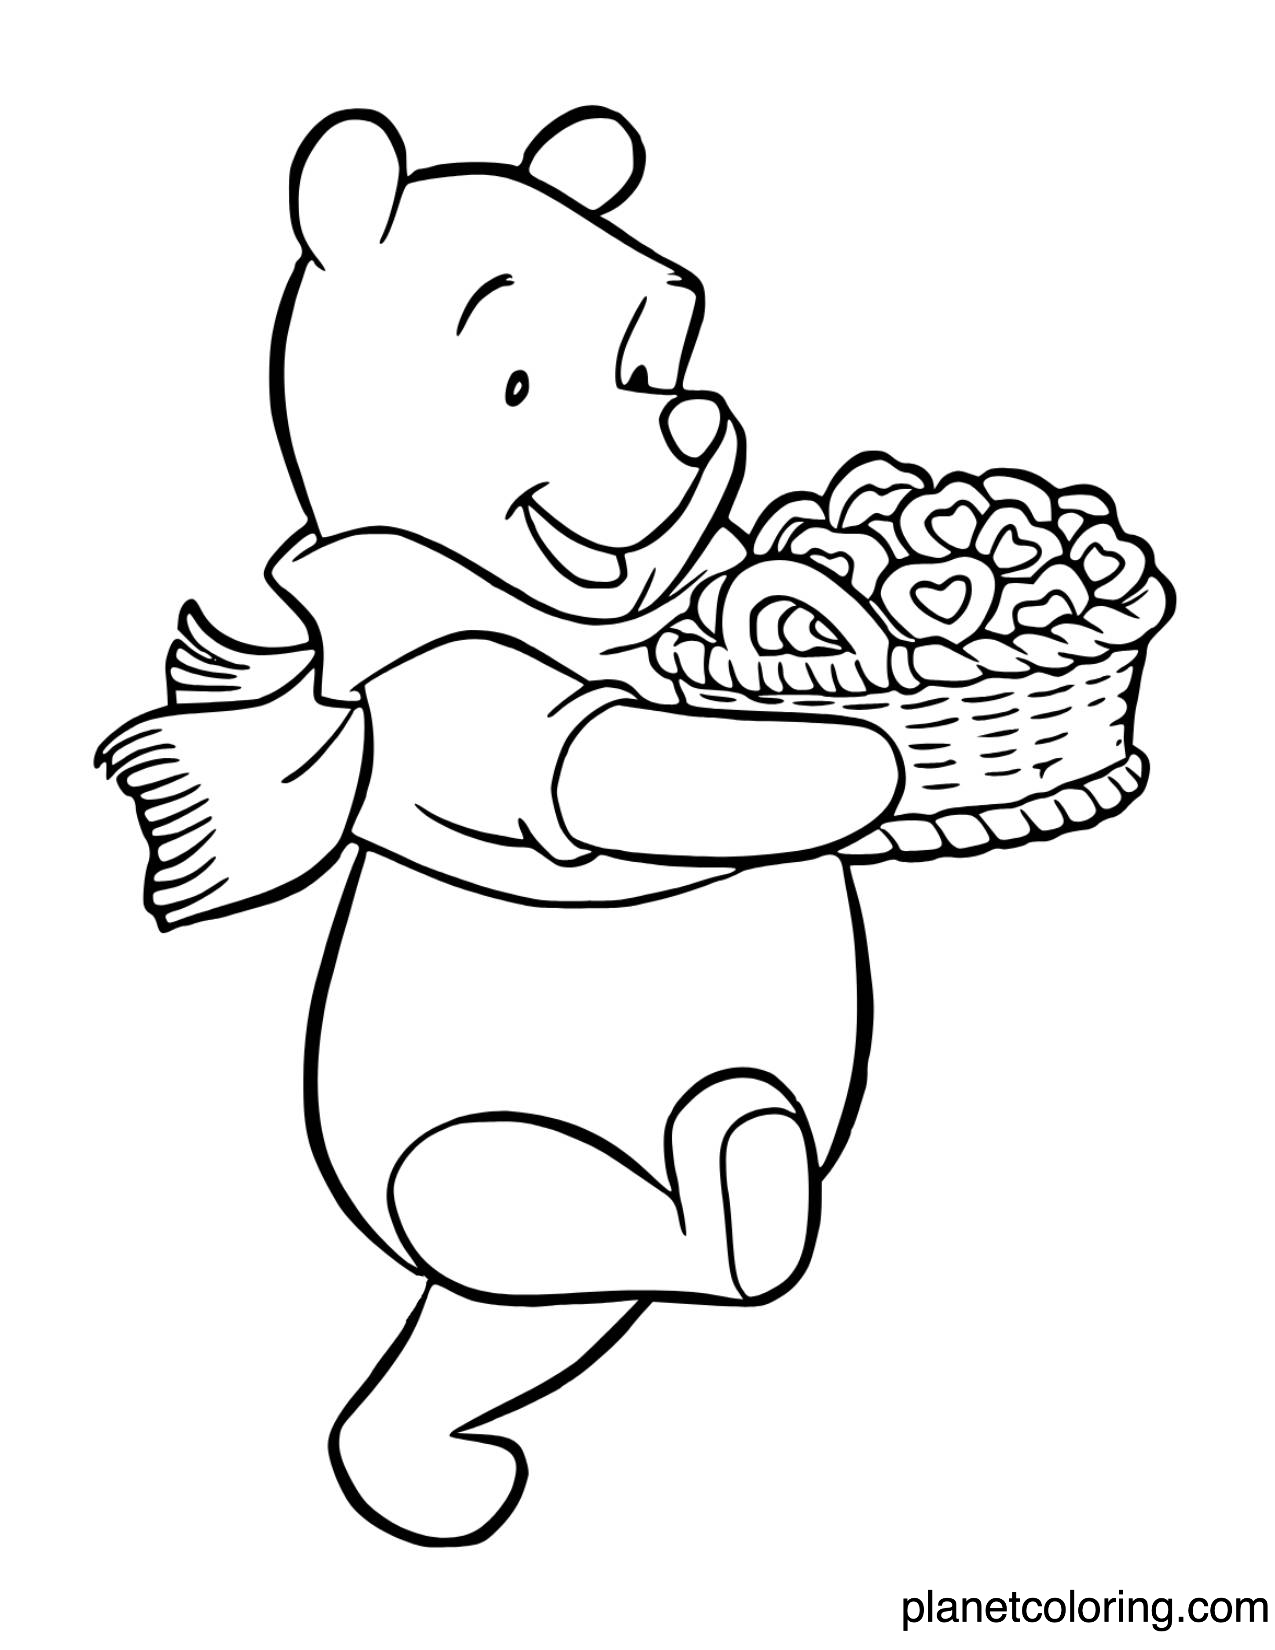 Pooh holds a basket